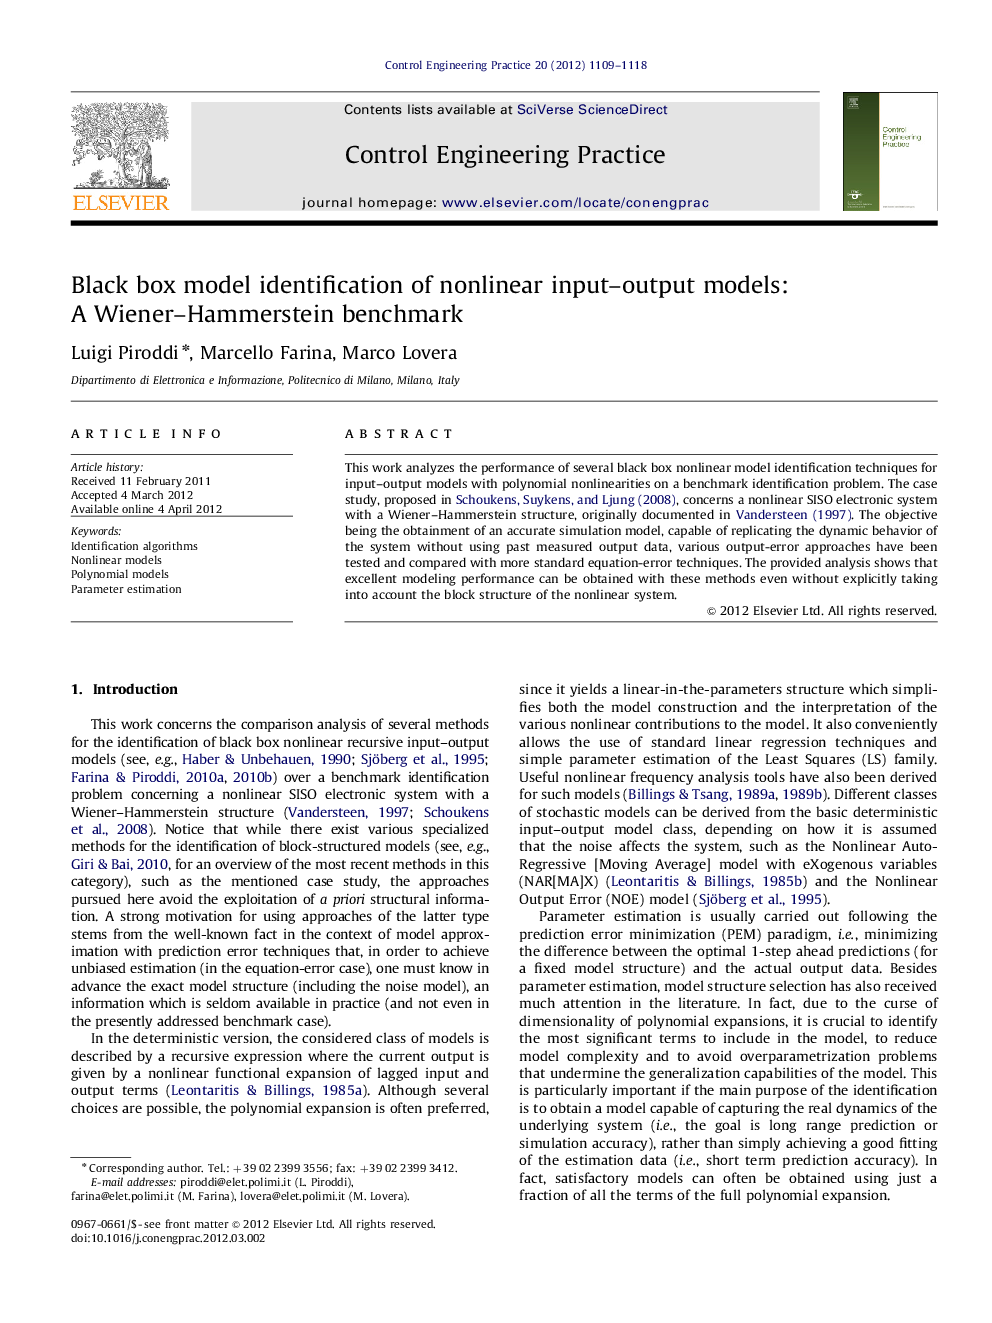 Black box model identification of nonlinear input–output models: A Wiener–Hammerstein benchmark